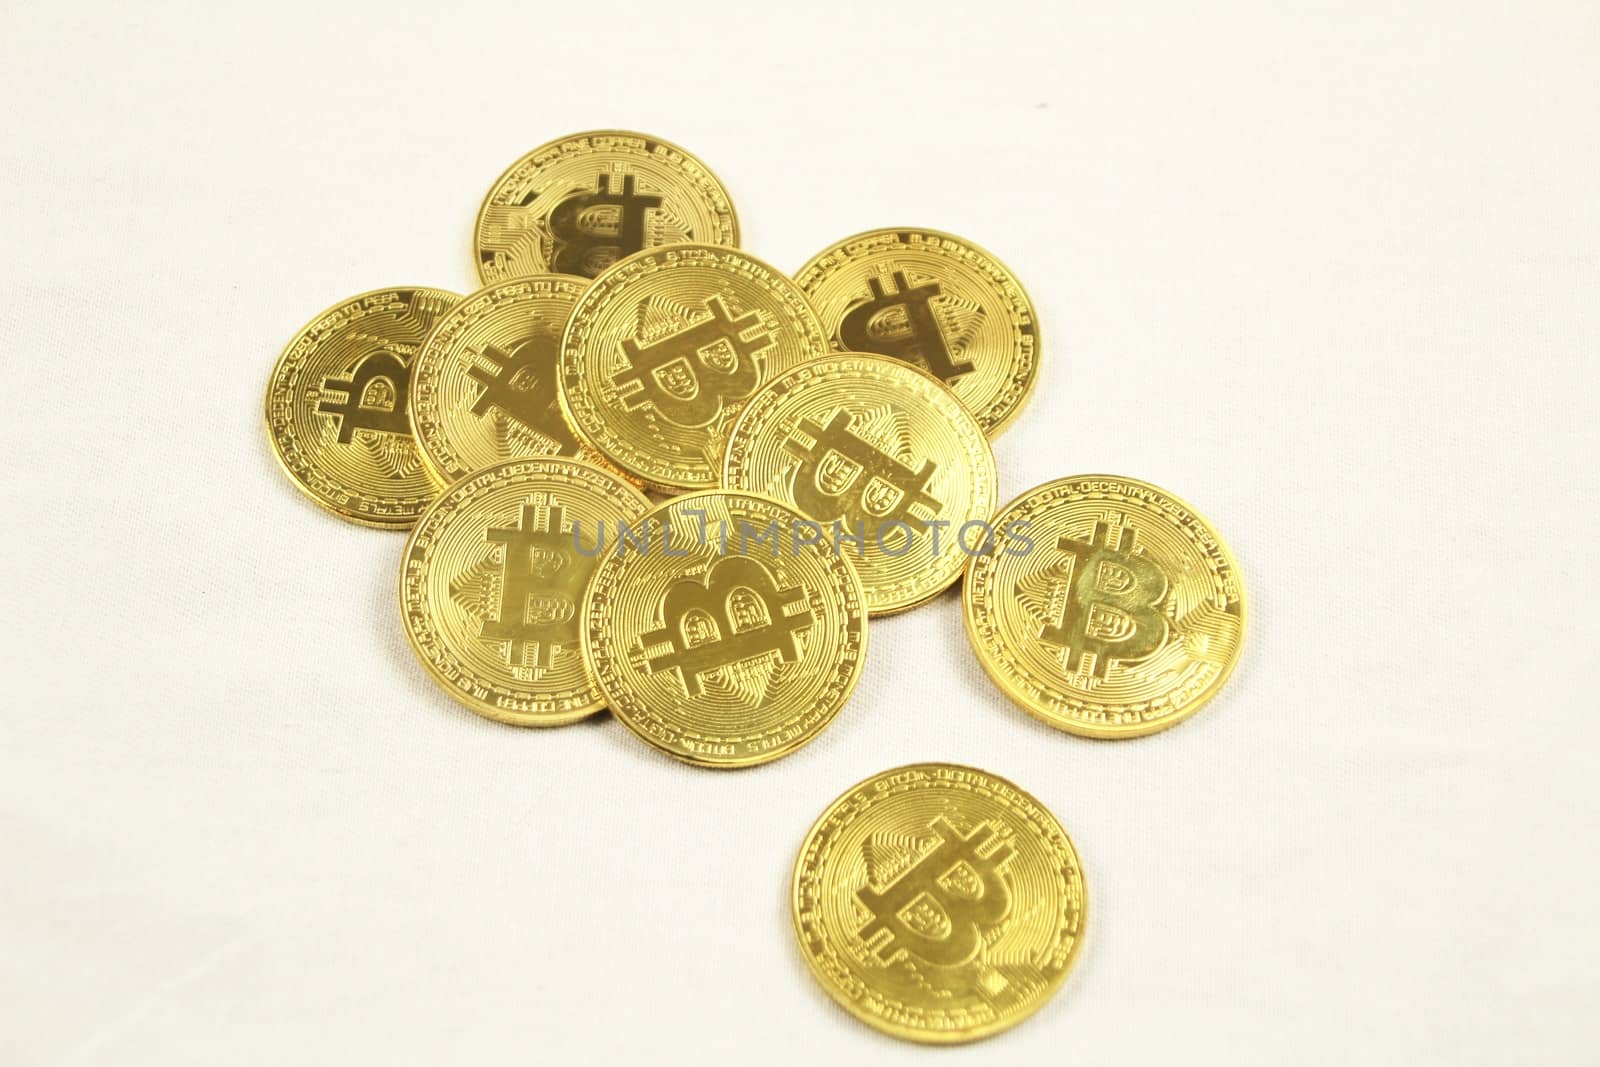 Golden bitcoins on white background by soniabonet